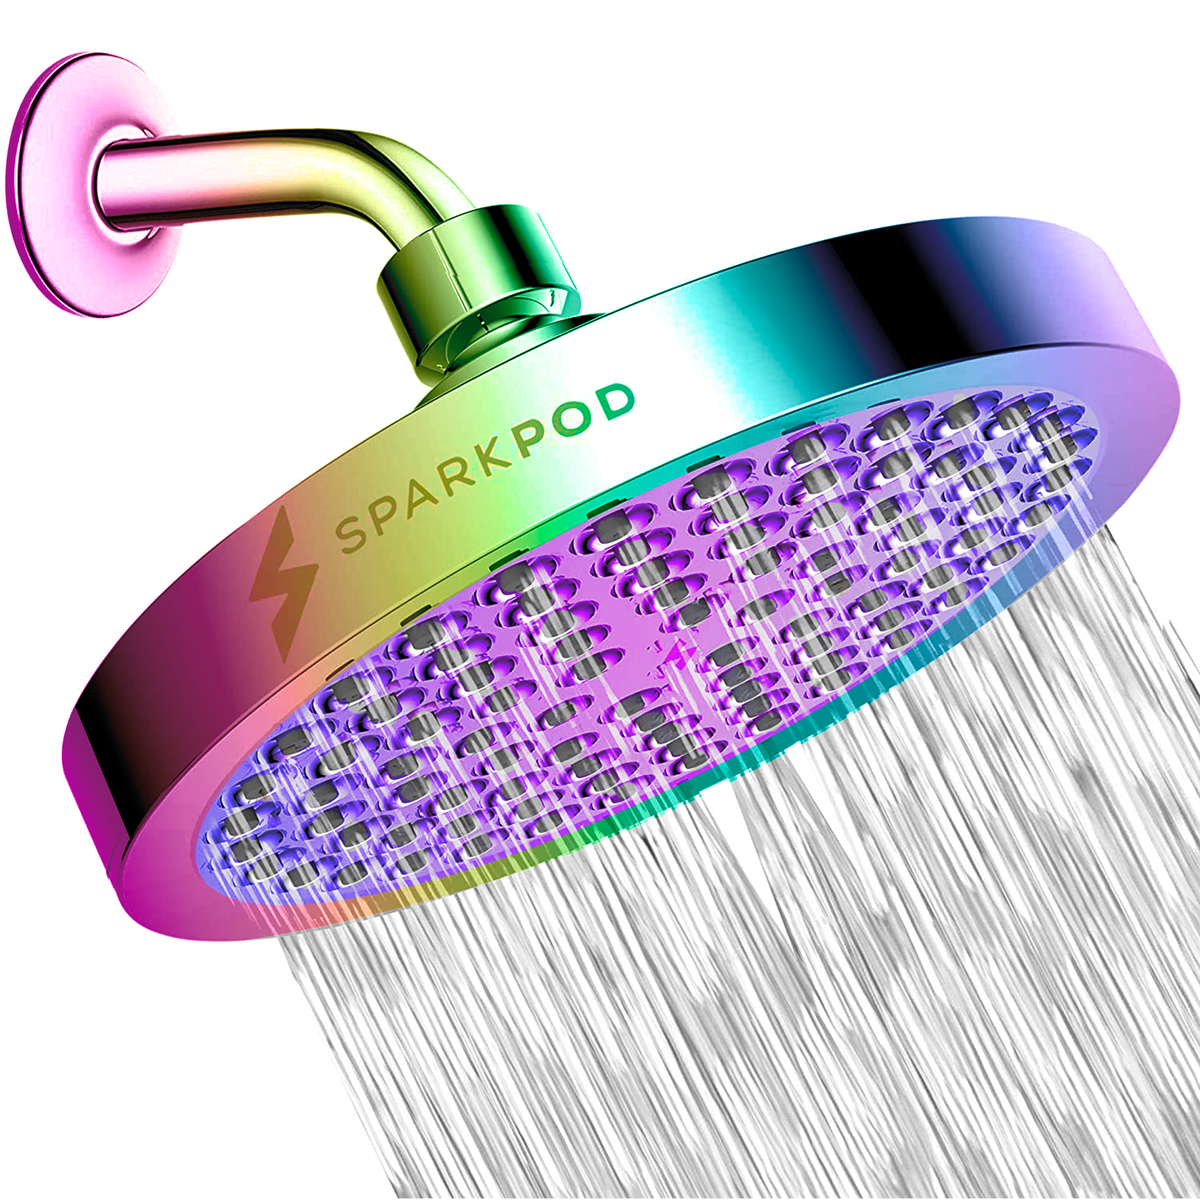 SparkPod Shower Head - High Pressure Rain - Luxury Modern Look - Tool-